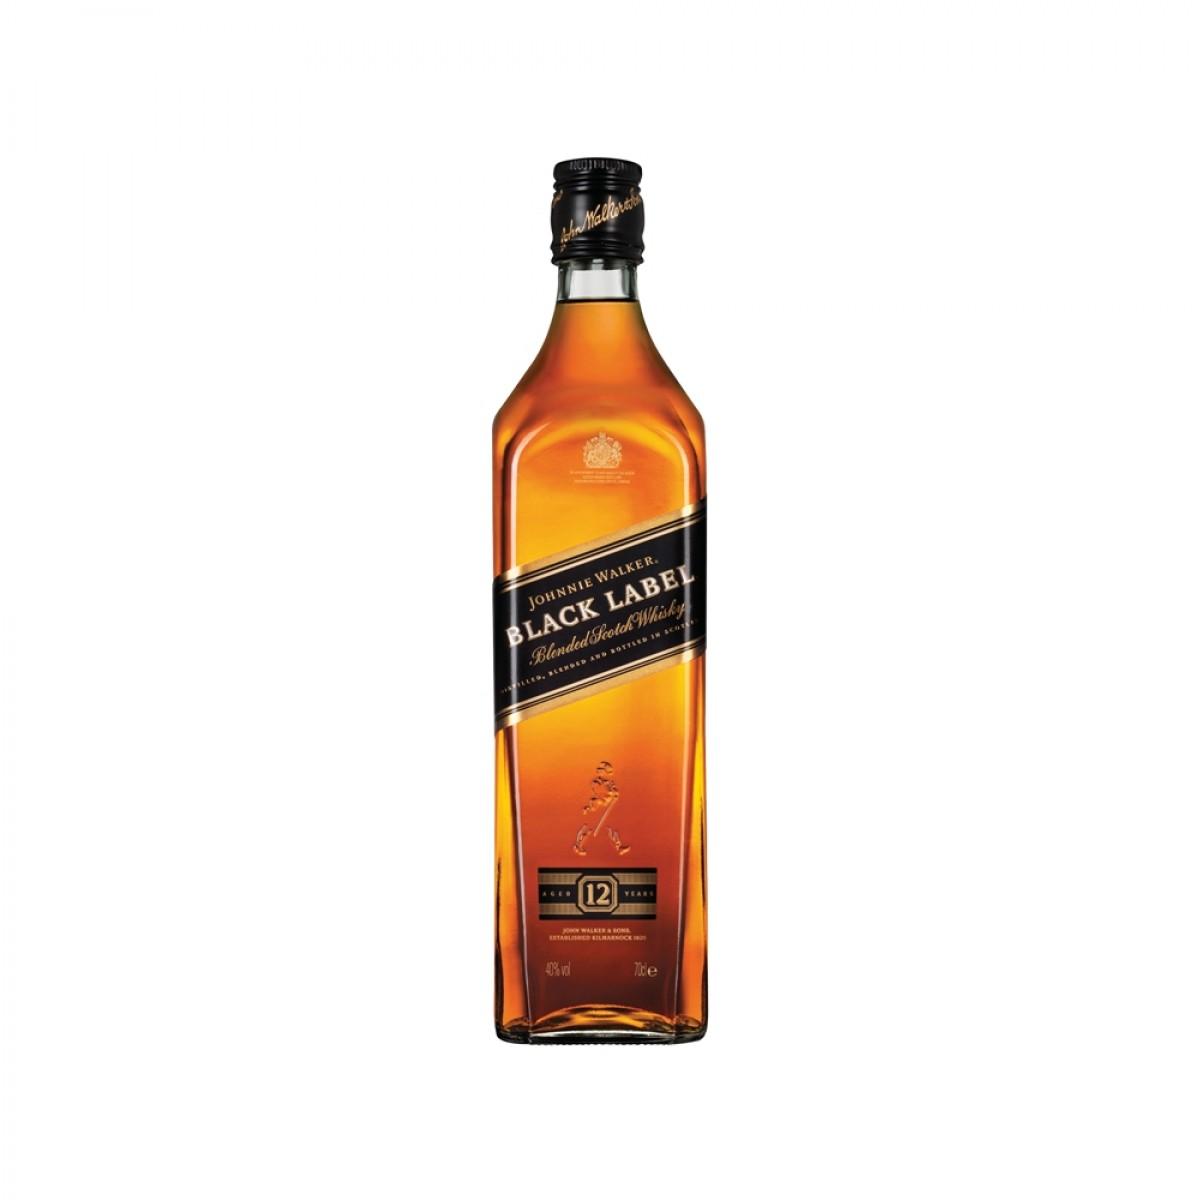 Whisky Black Label - Aelia Duty Free